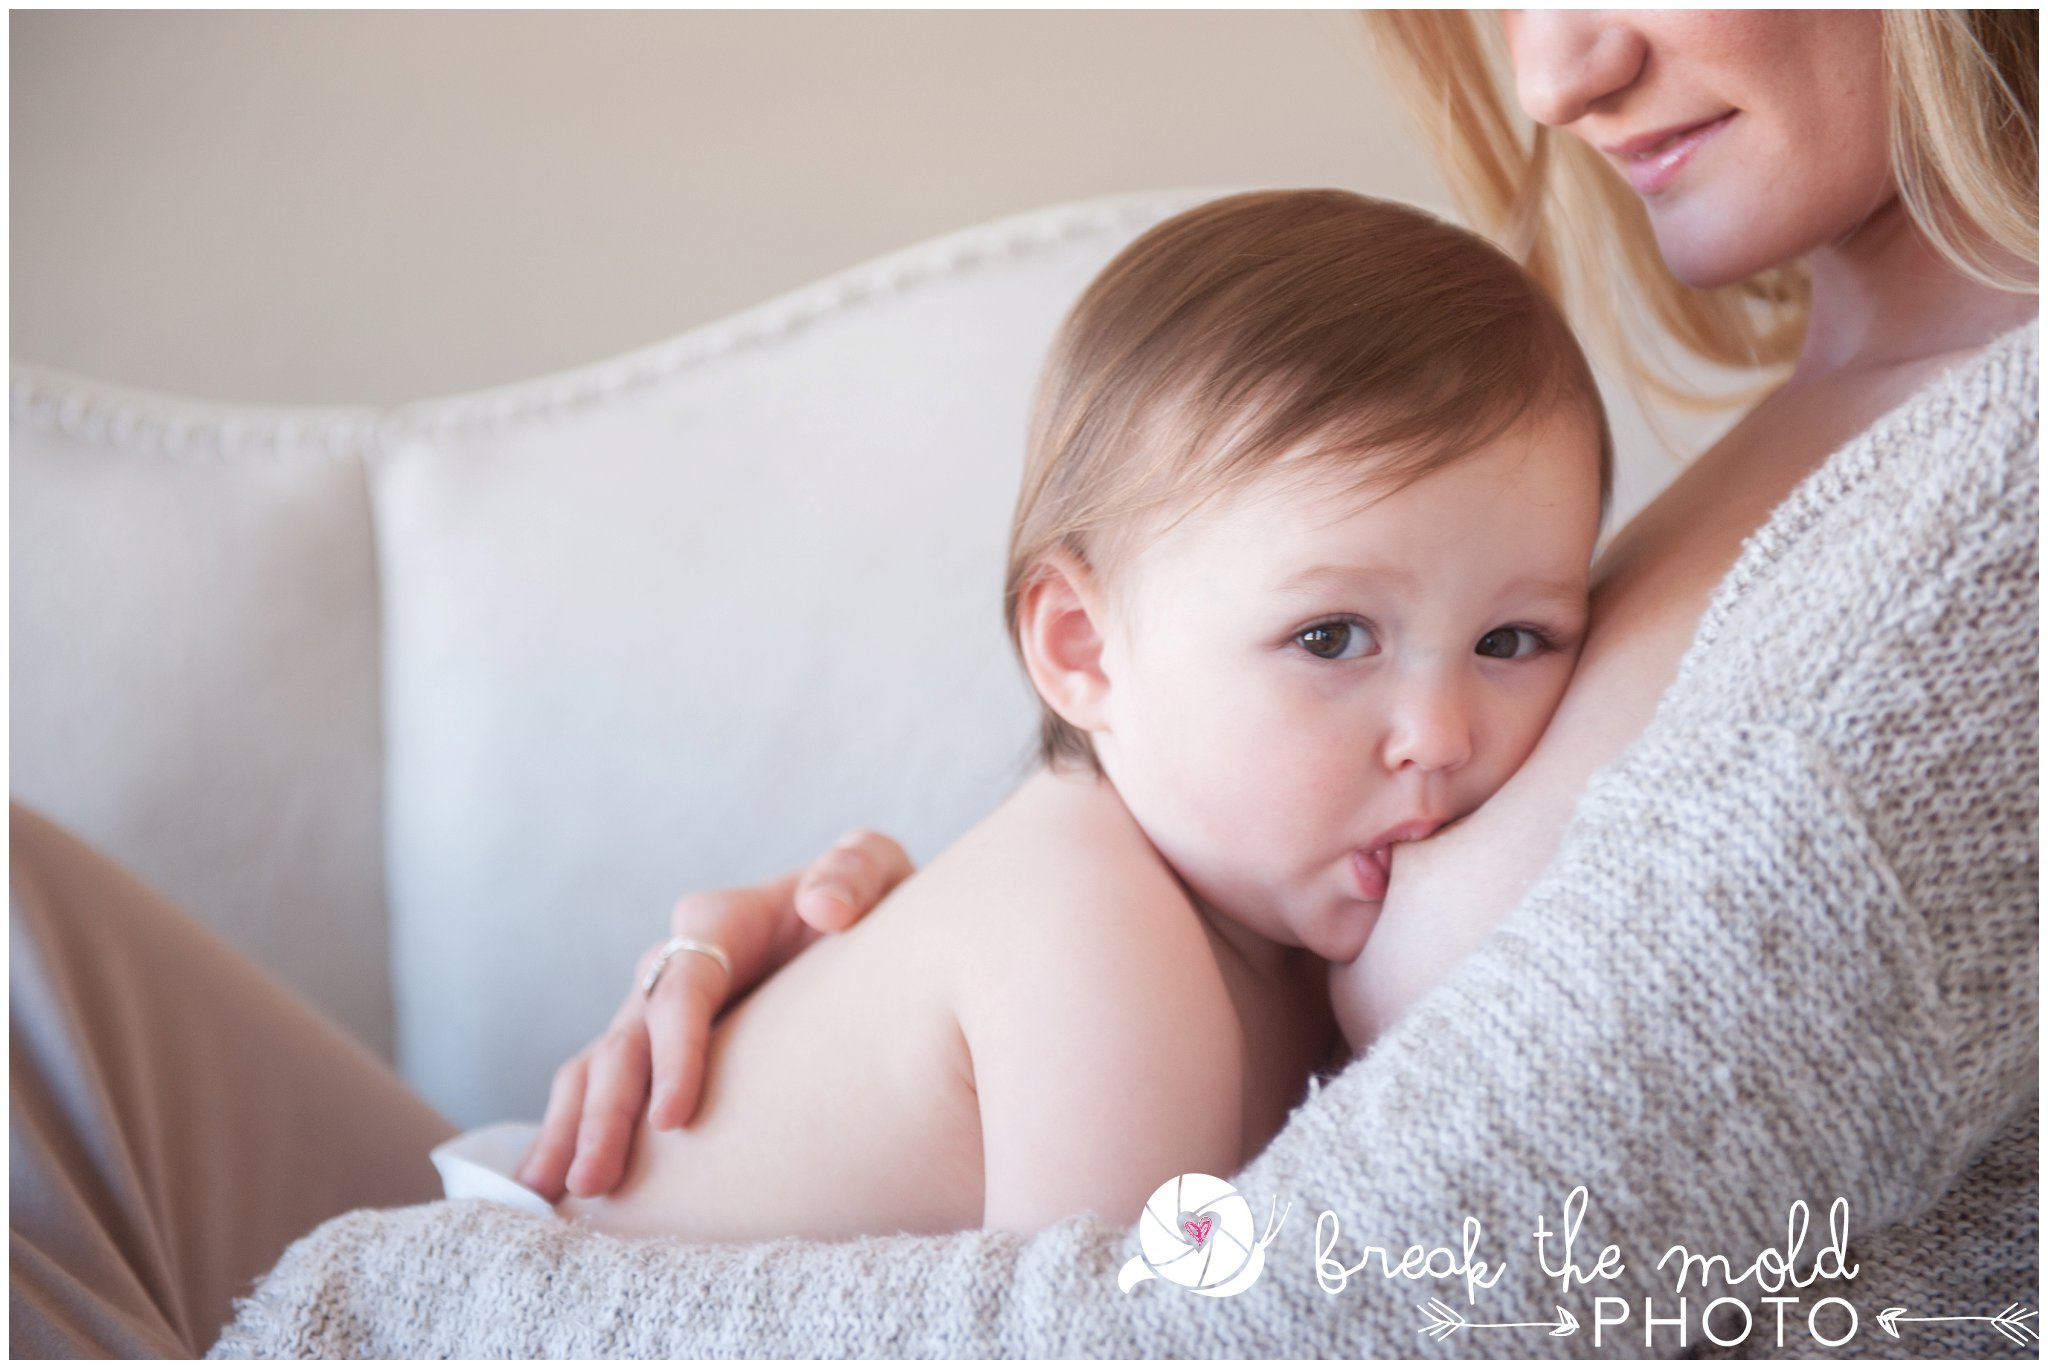 break-the-mold-photo-nursing-body-love-baby-pregnant-women-powerful-breastfeeding-sessions_7224.jpg